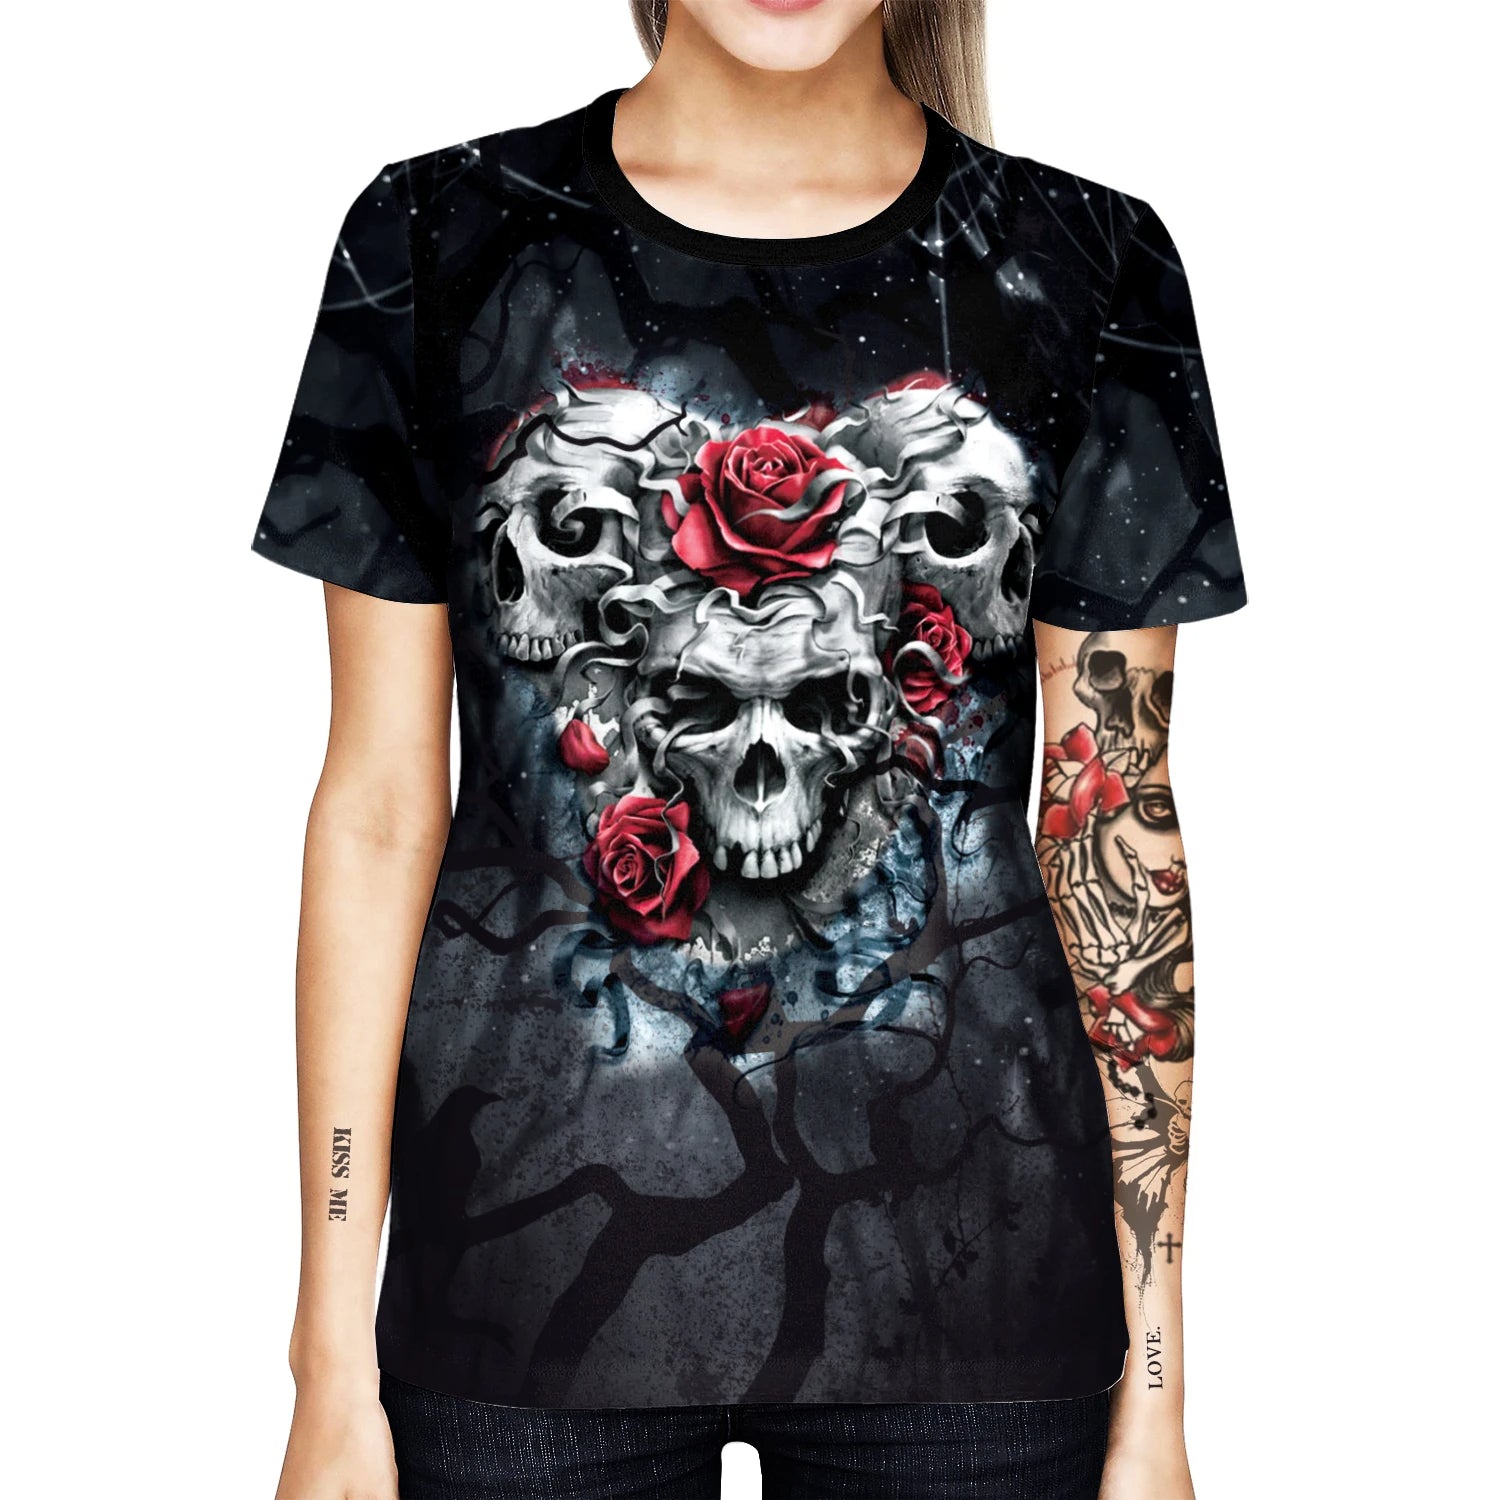 Tee-shirt gothique crane humain 3D & roses